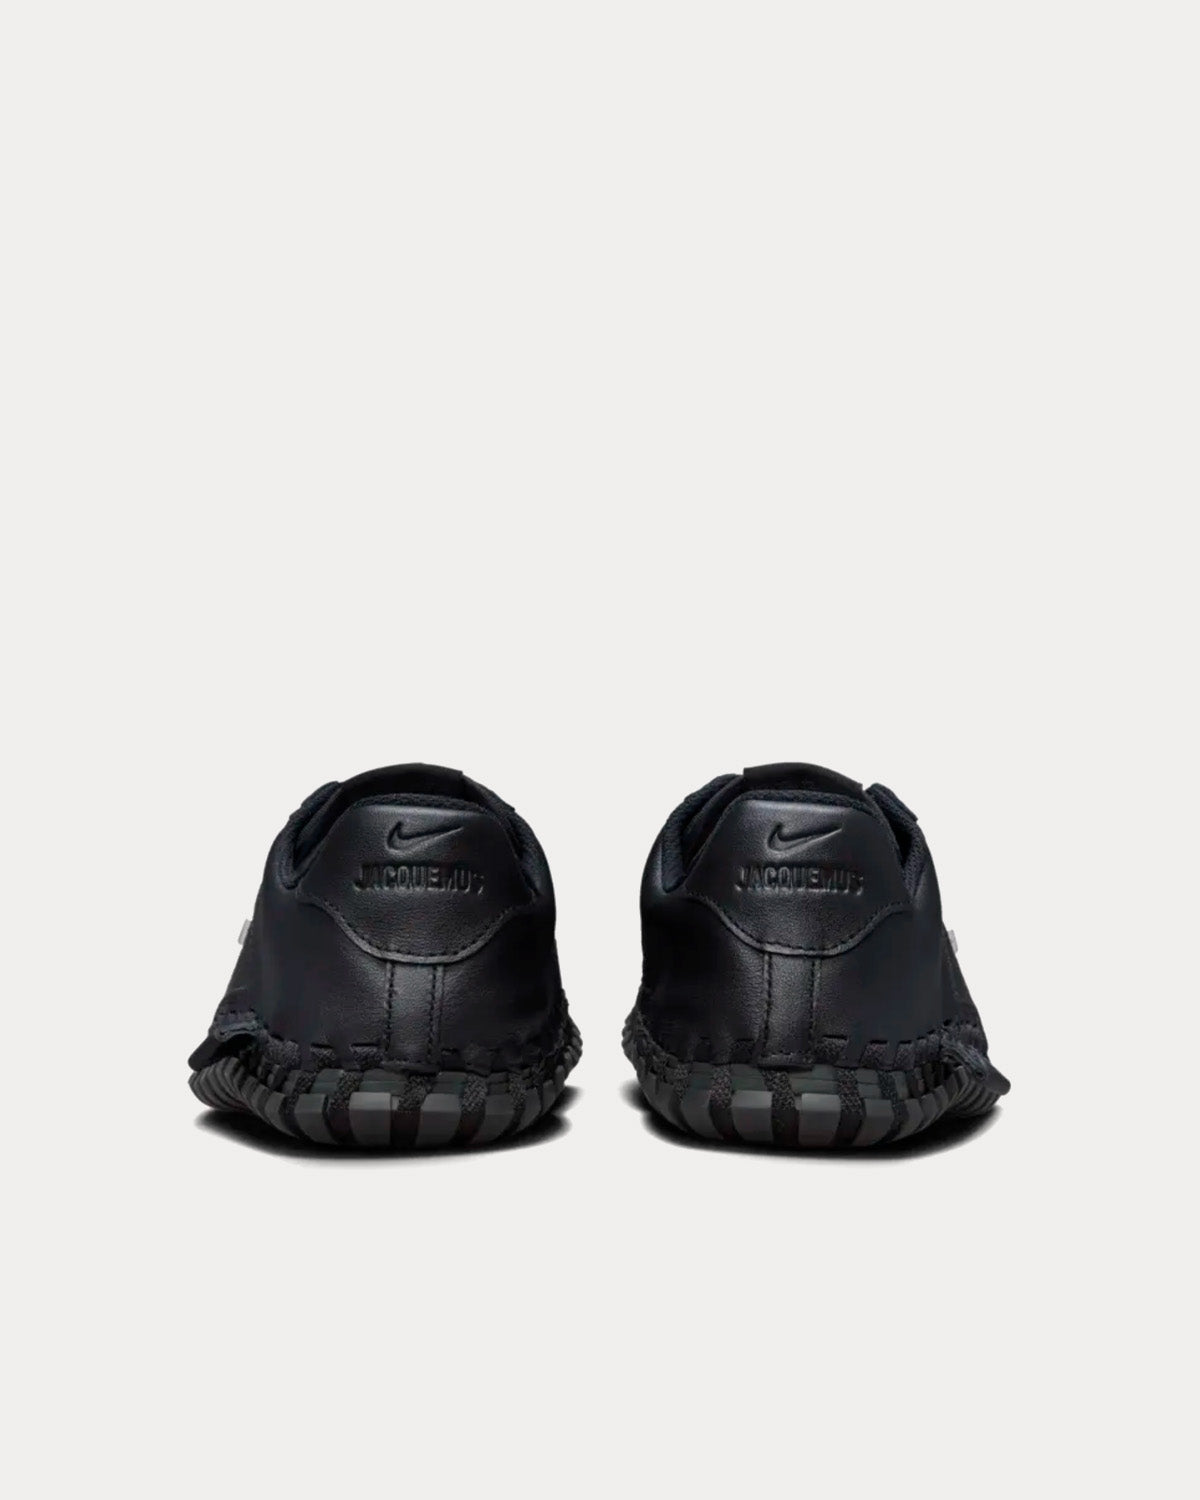 Nike x Jacquemus - J Force 1 Black Low Top Sneakers